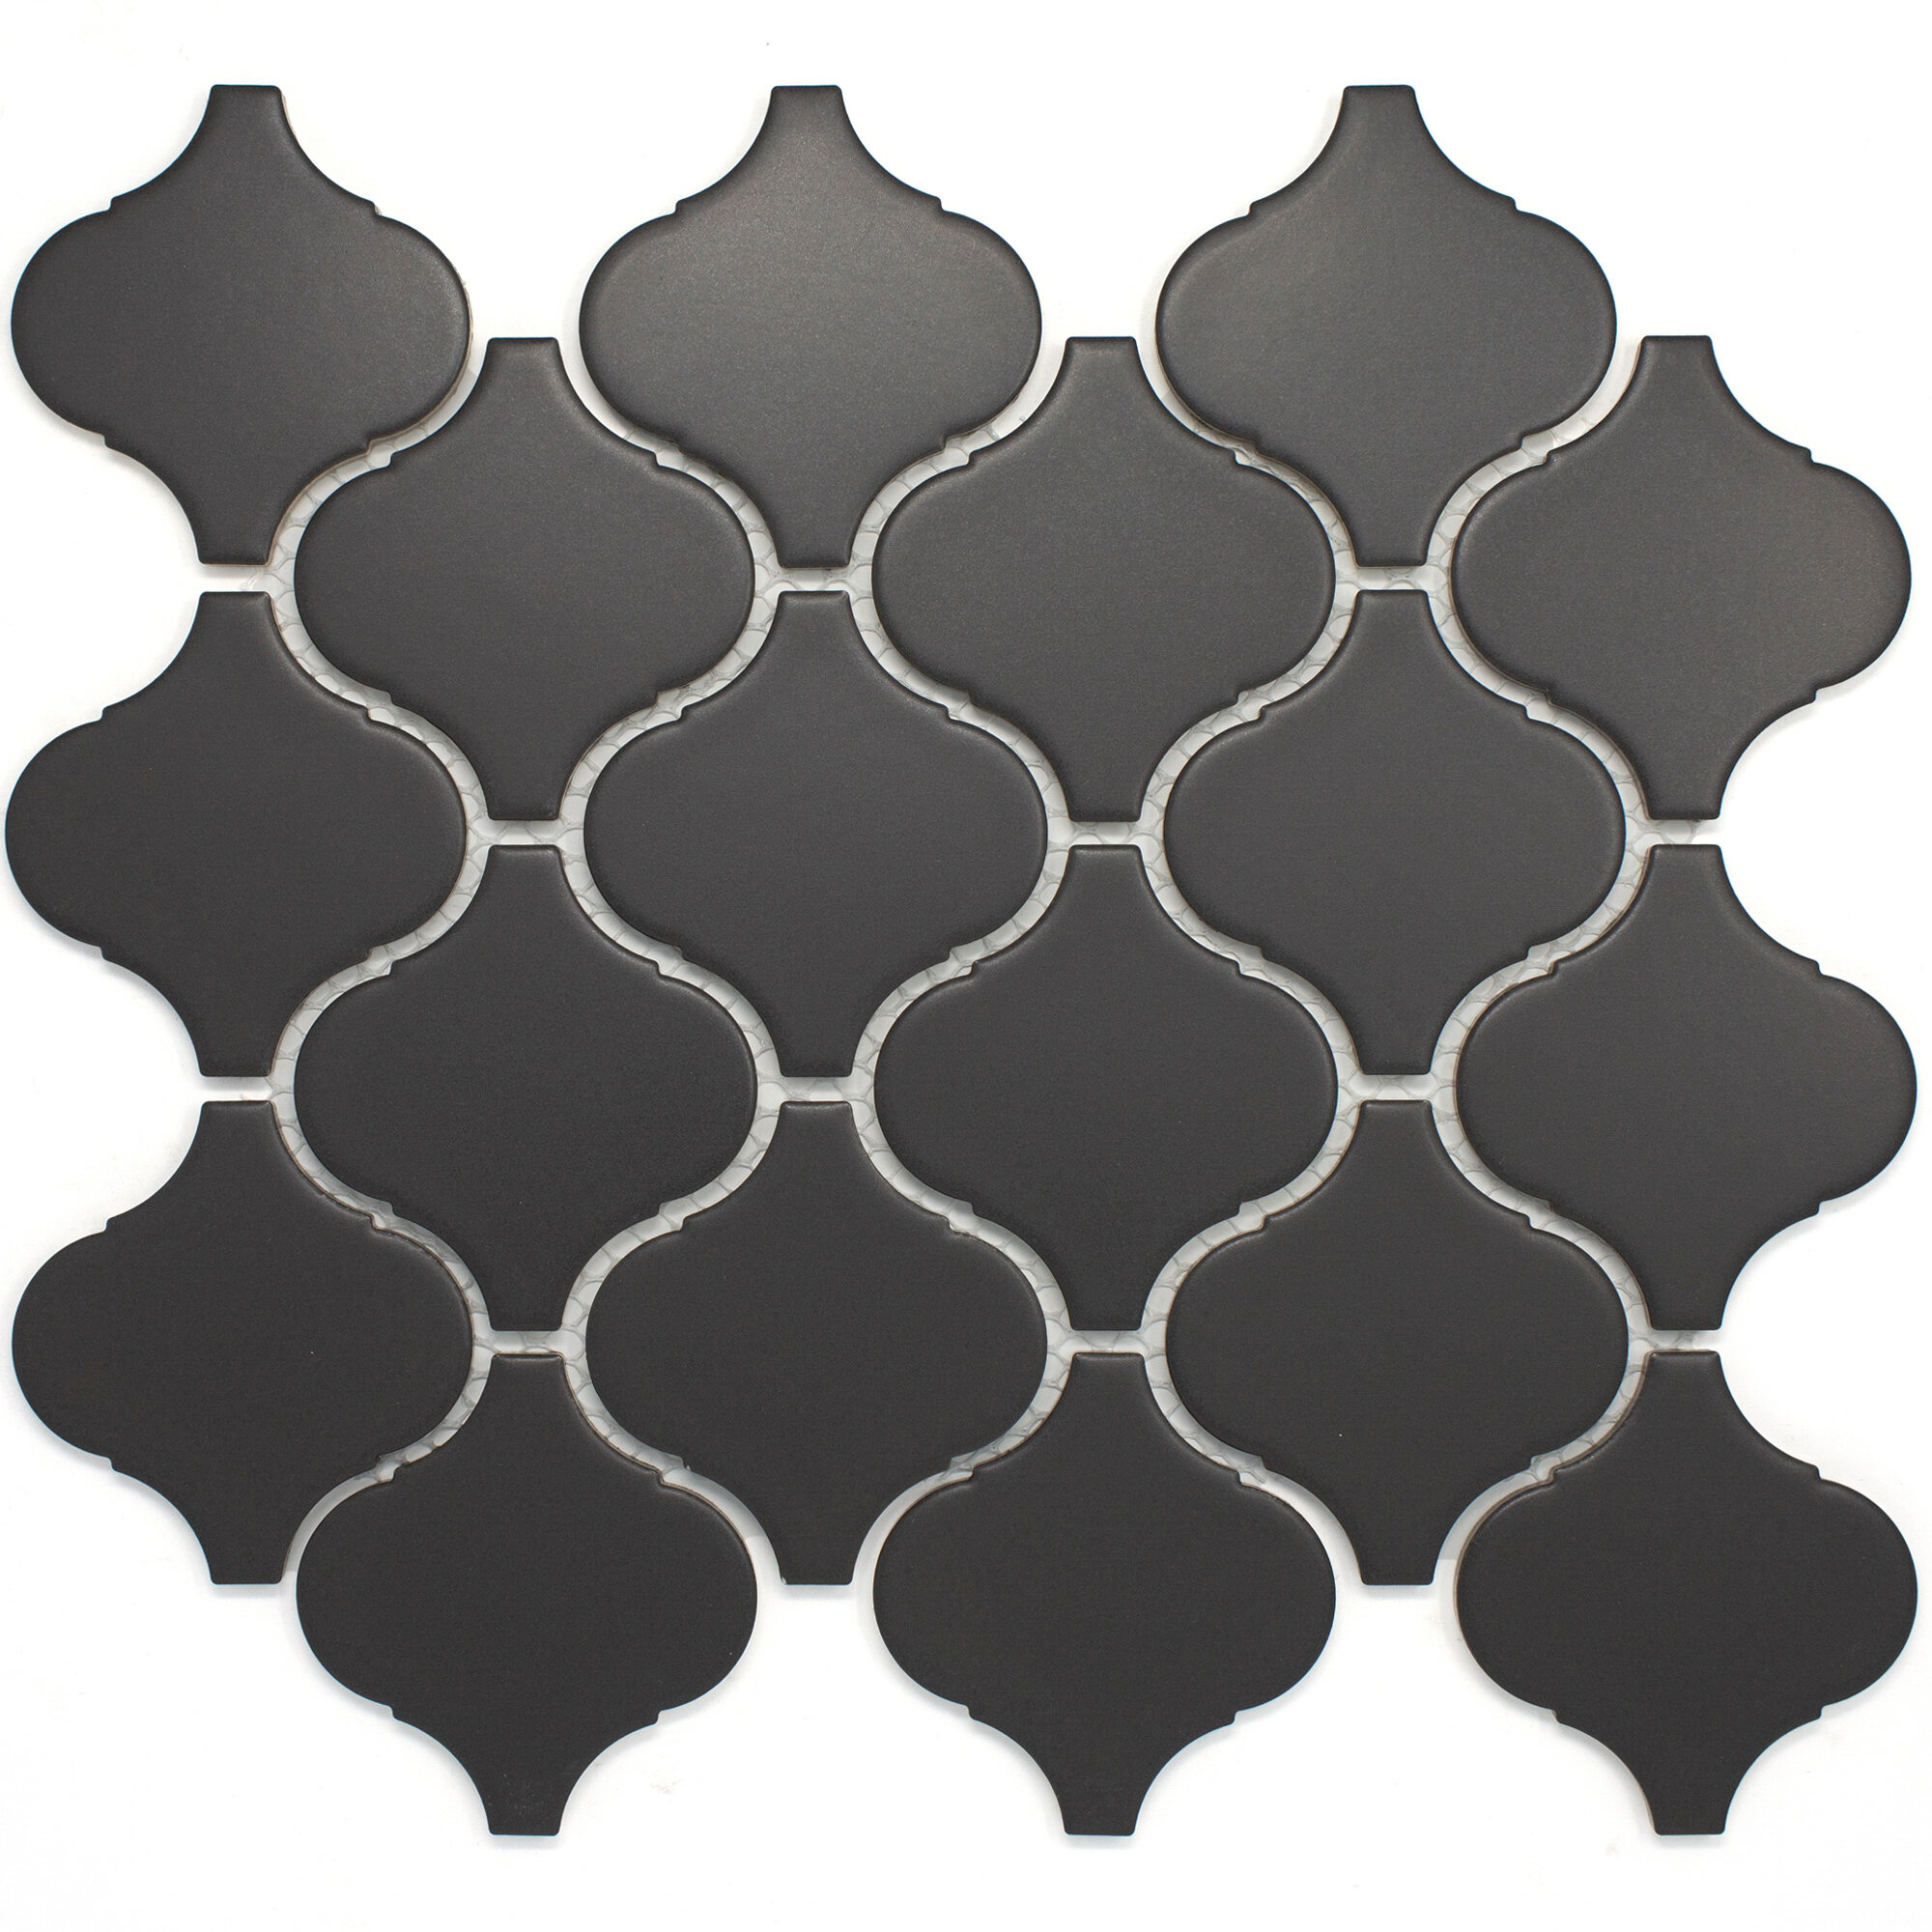 Supreme Tile Lantern 3 X 3 Porcelain Grid Mosaic Wall Floor Tile Reviews Wayfair